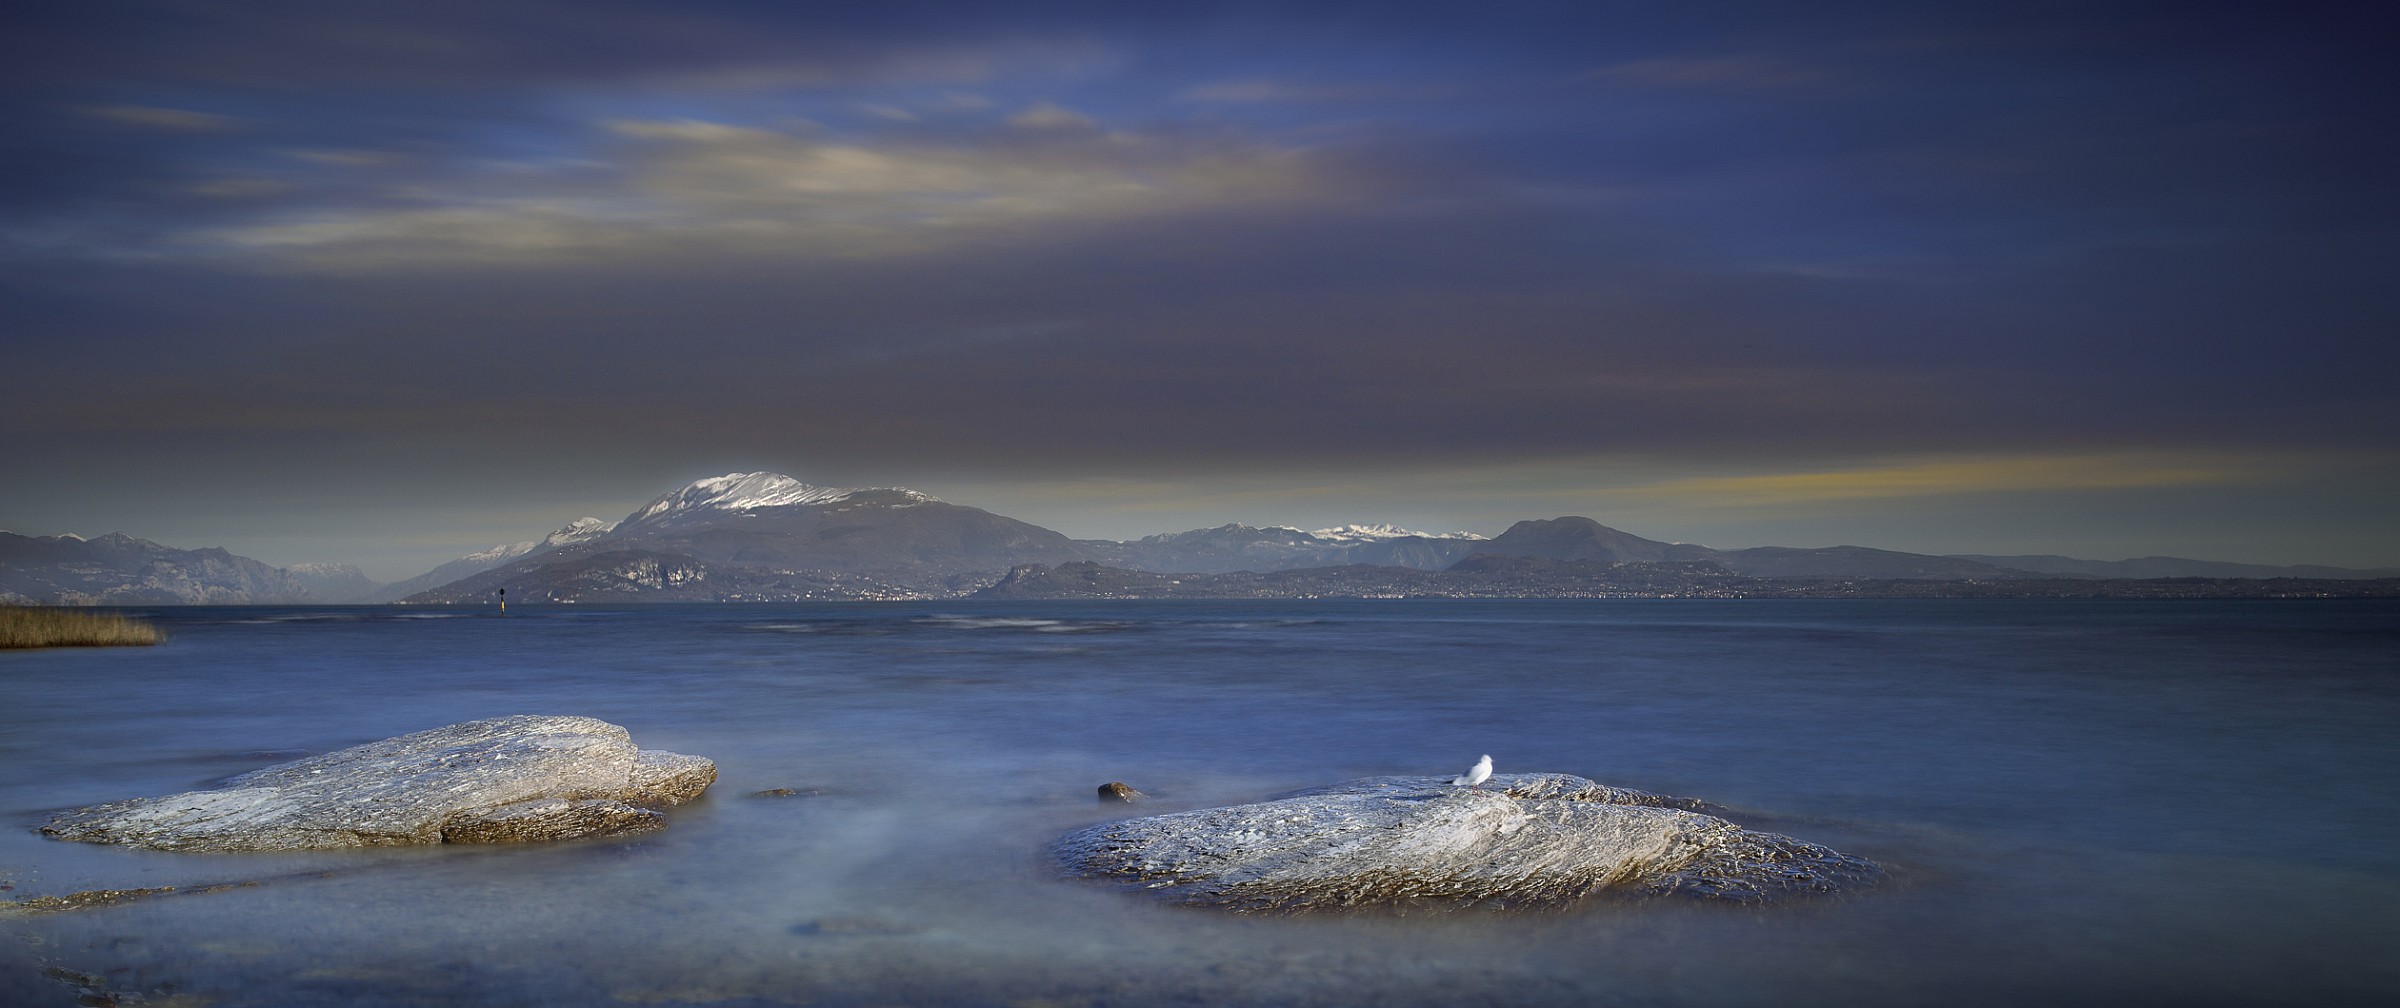 Lake Garda - Sirmione...